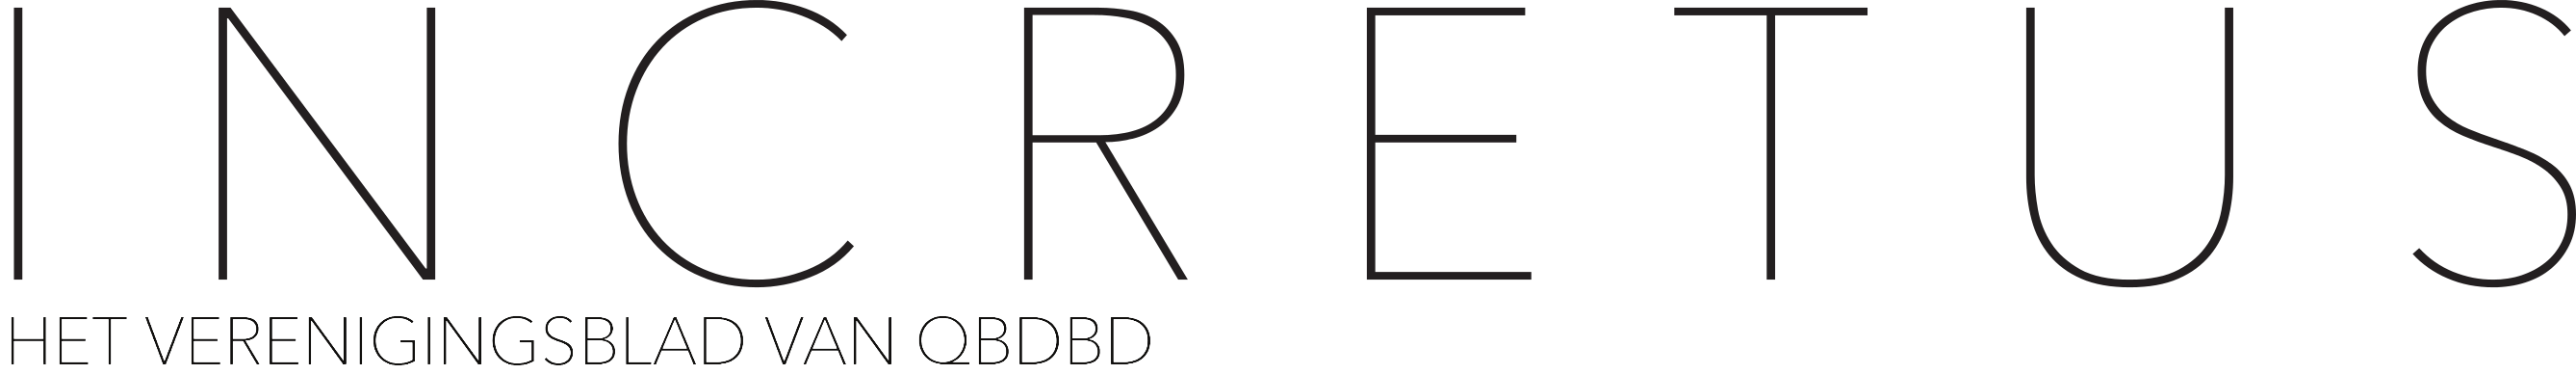 QBDBD - logo